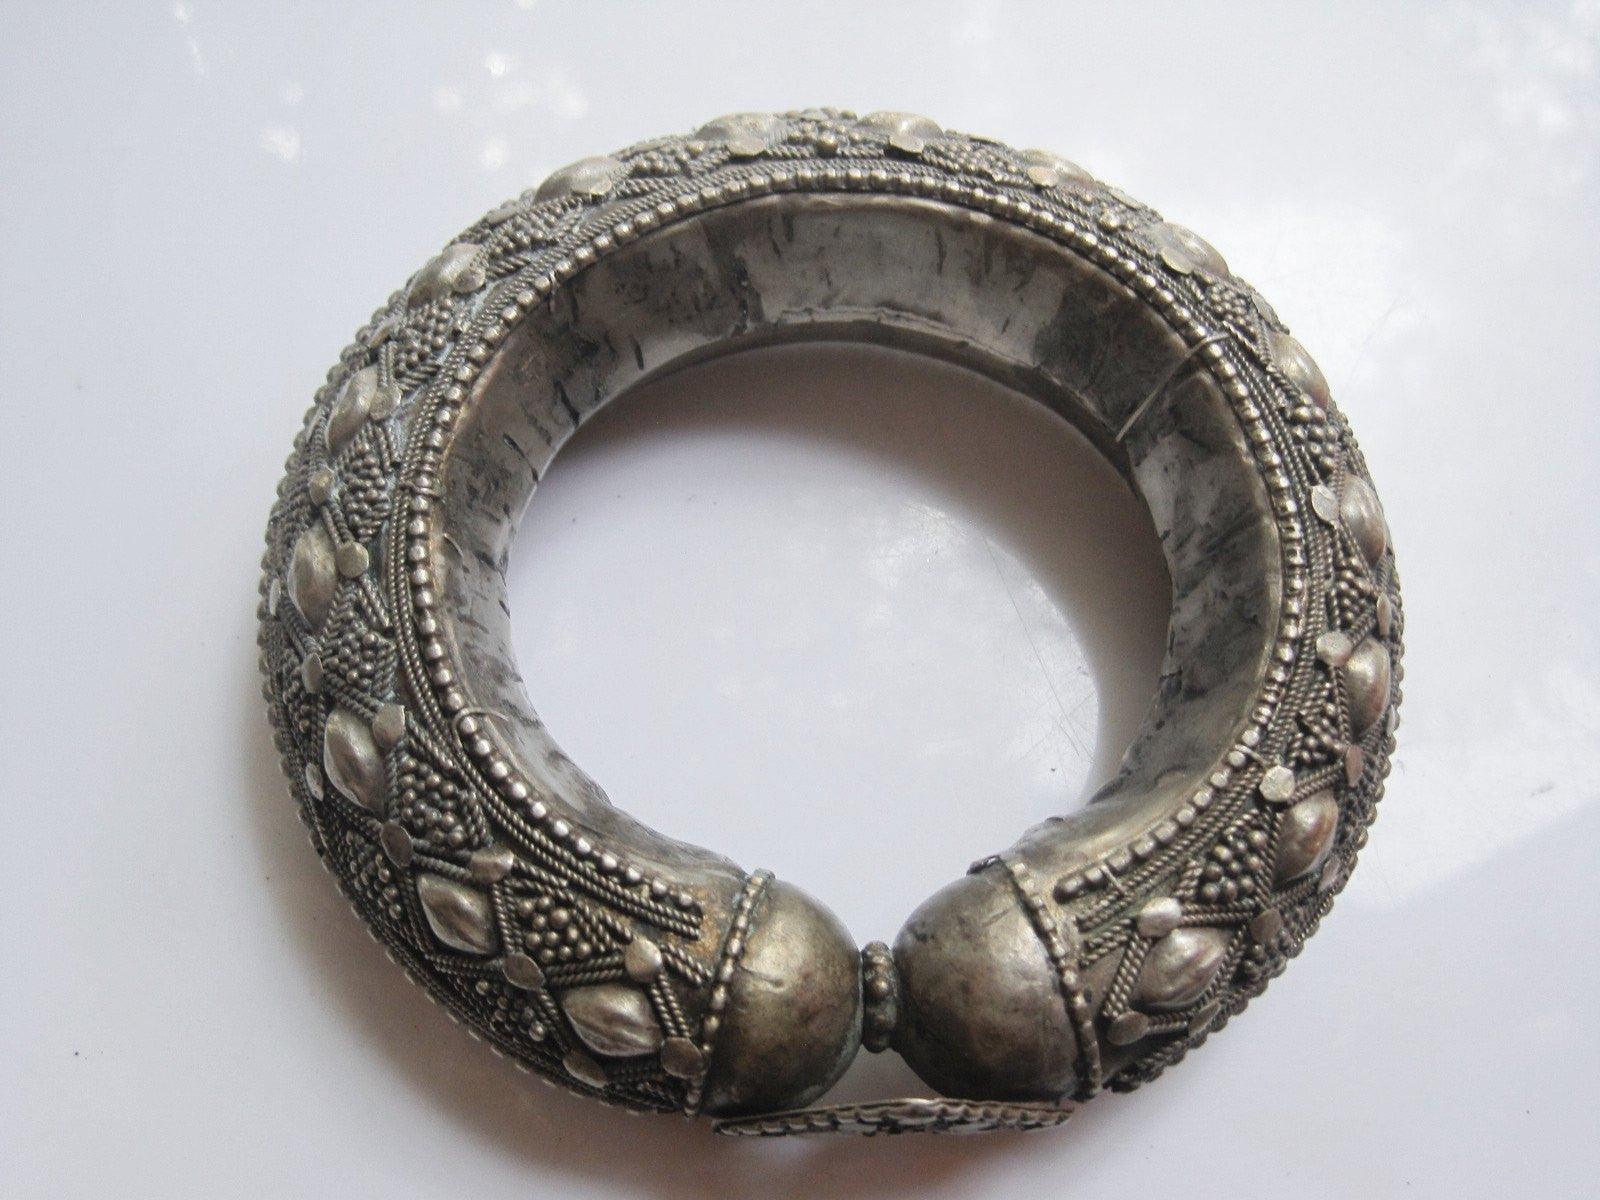 Yemeni bracelet